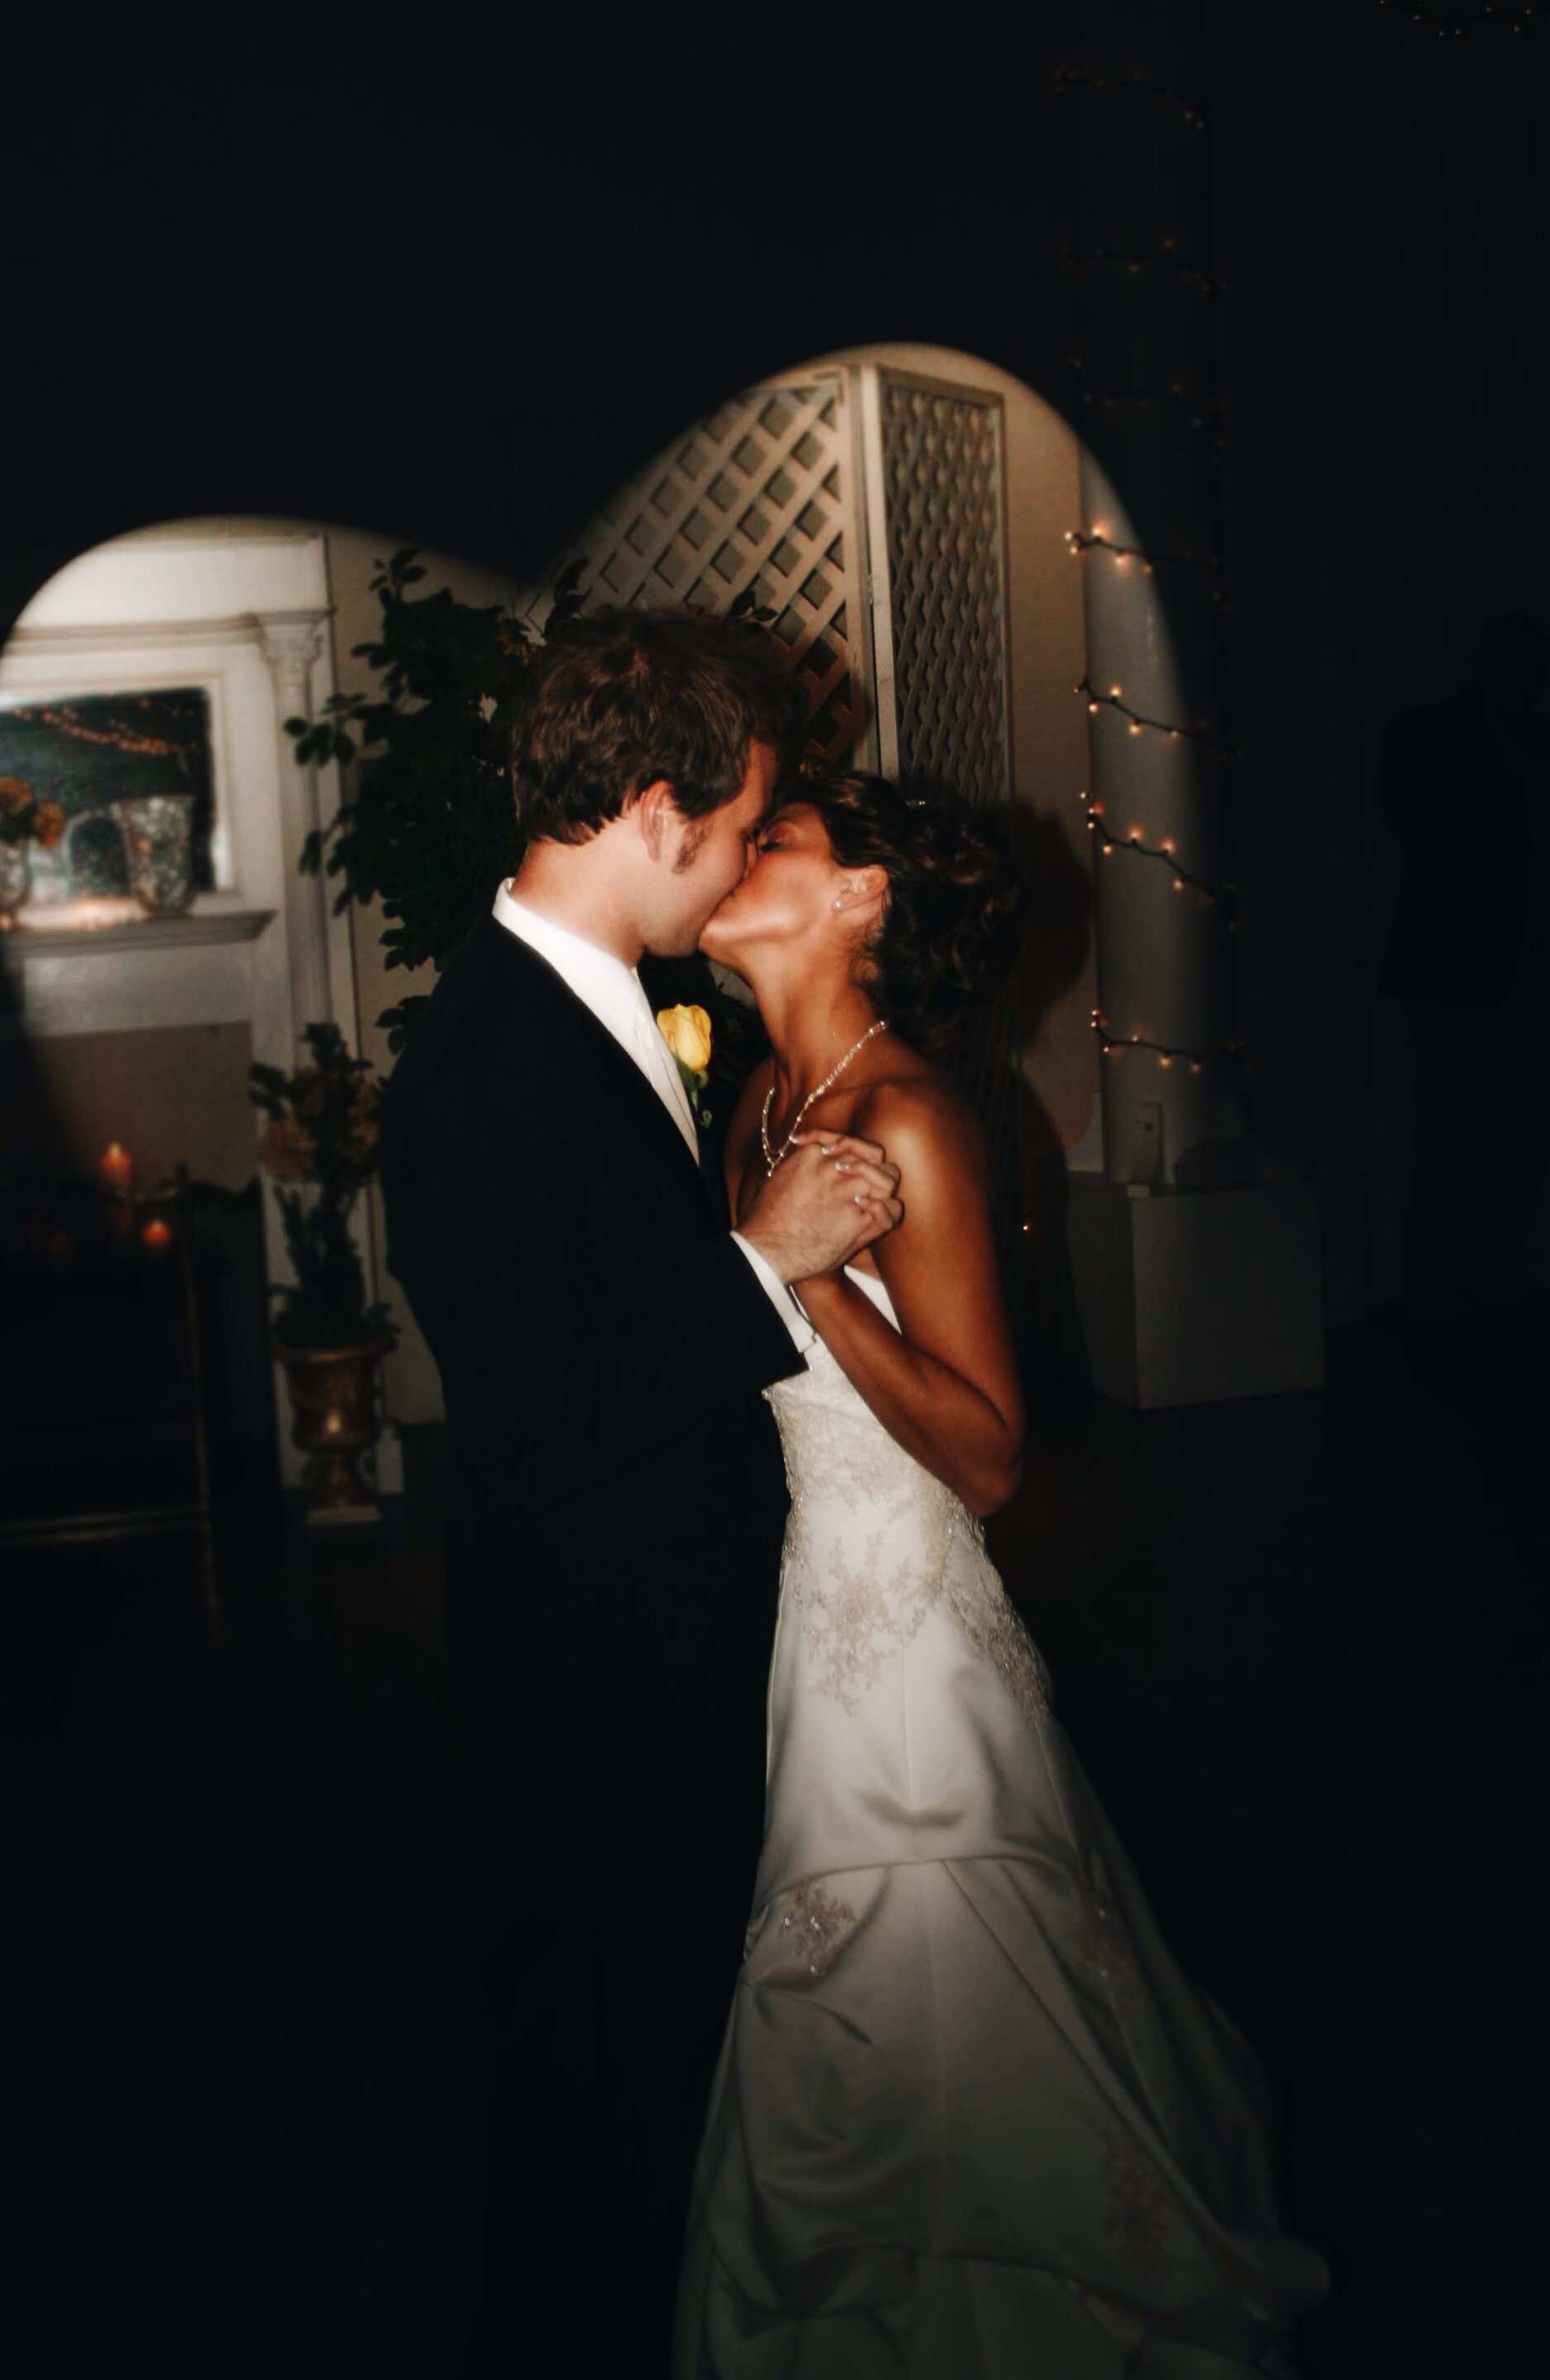 CELEBRATING 12 YEARS - OUR WEDDING (Via JacinthaPayne.com)